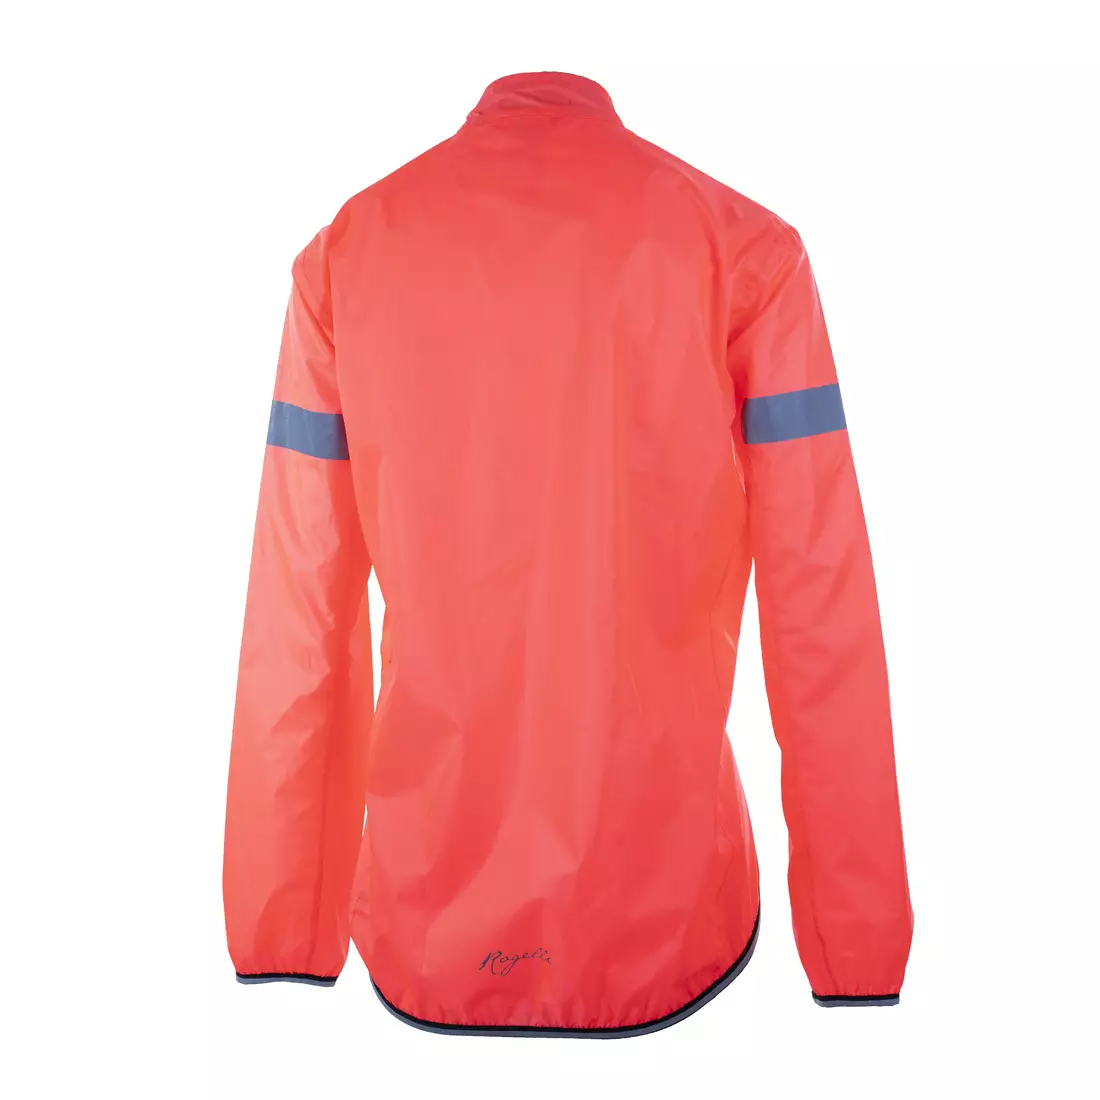 ROGELLI PROTECT Women's rainproof cycling jacket, fluo pink 010.407